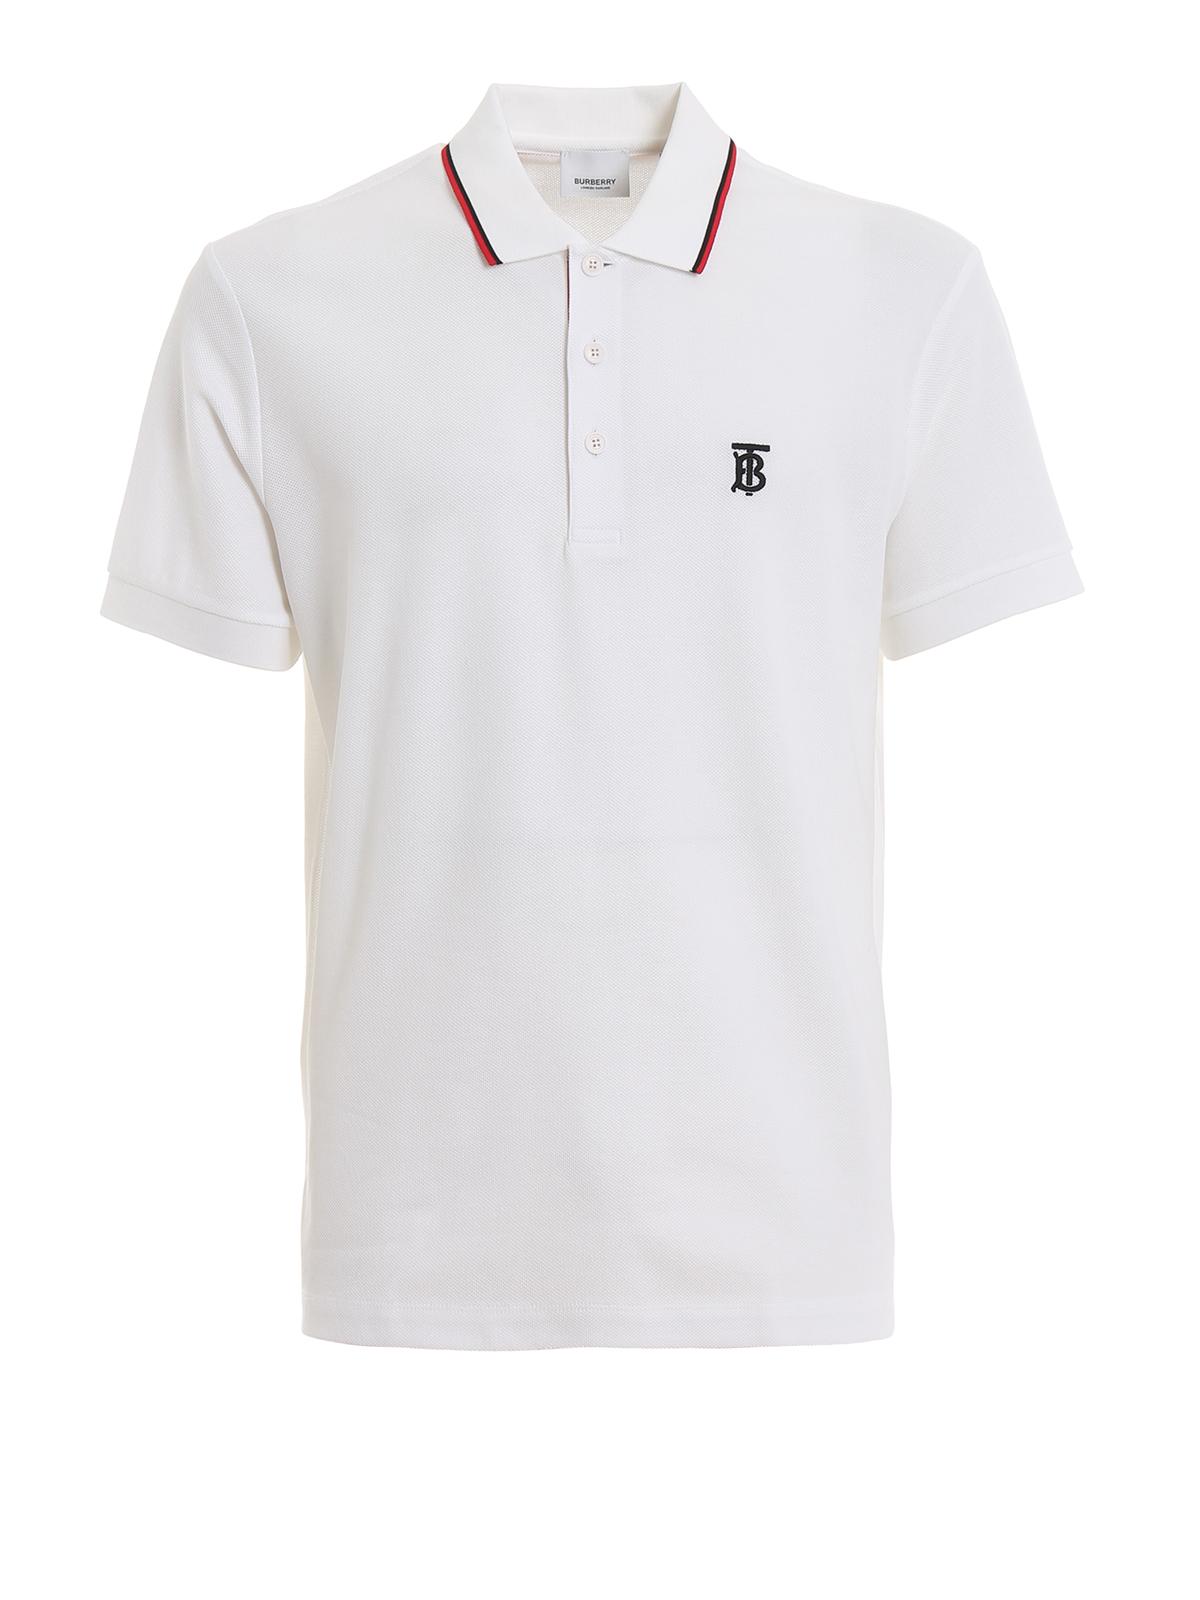 Burberry Cotton Walton Polo Shirt in White for Men - Save 33% - Lyst